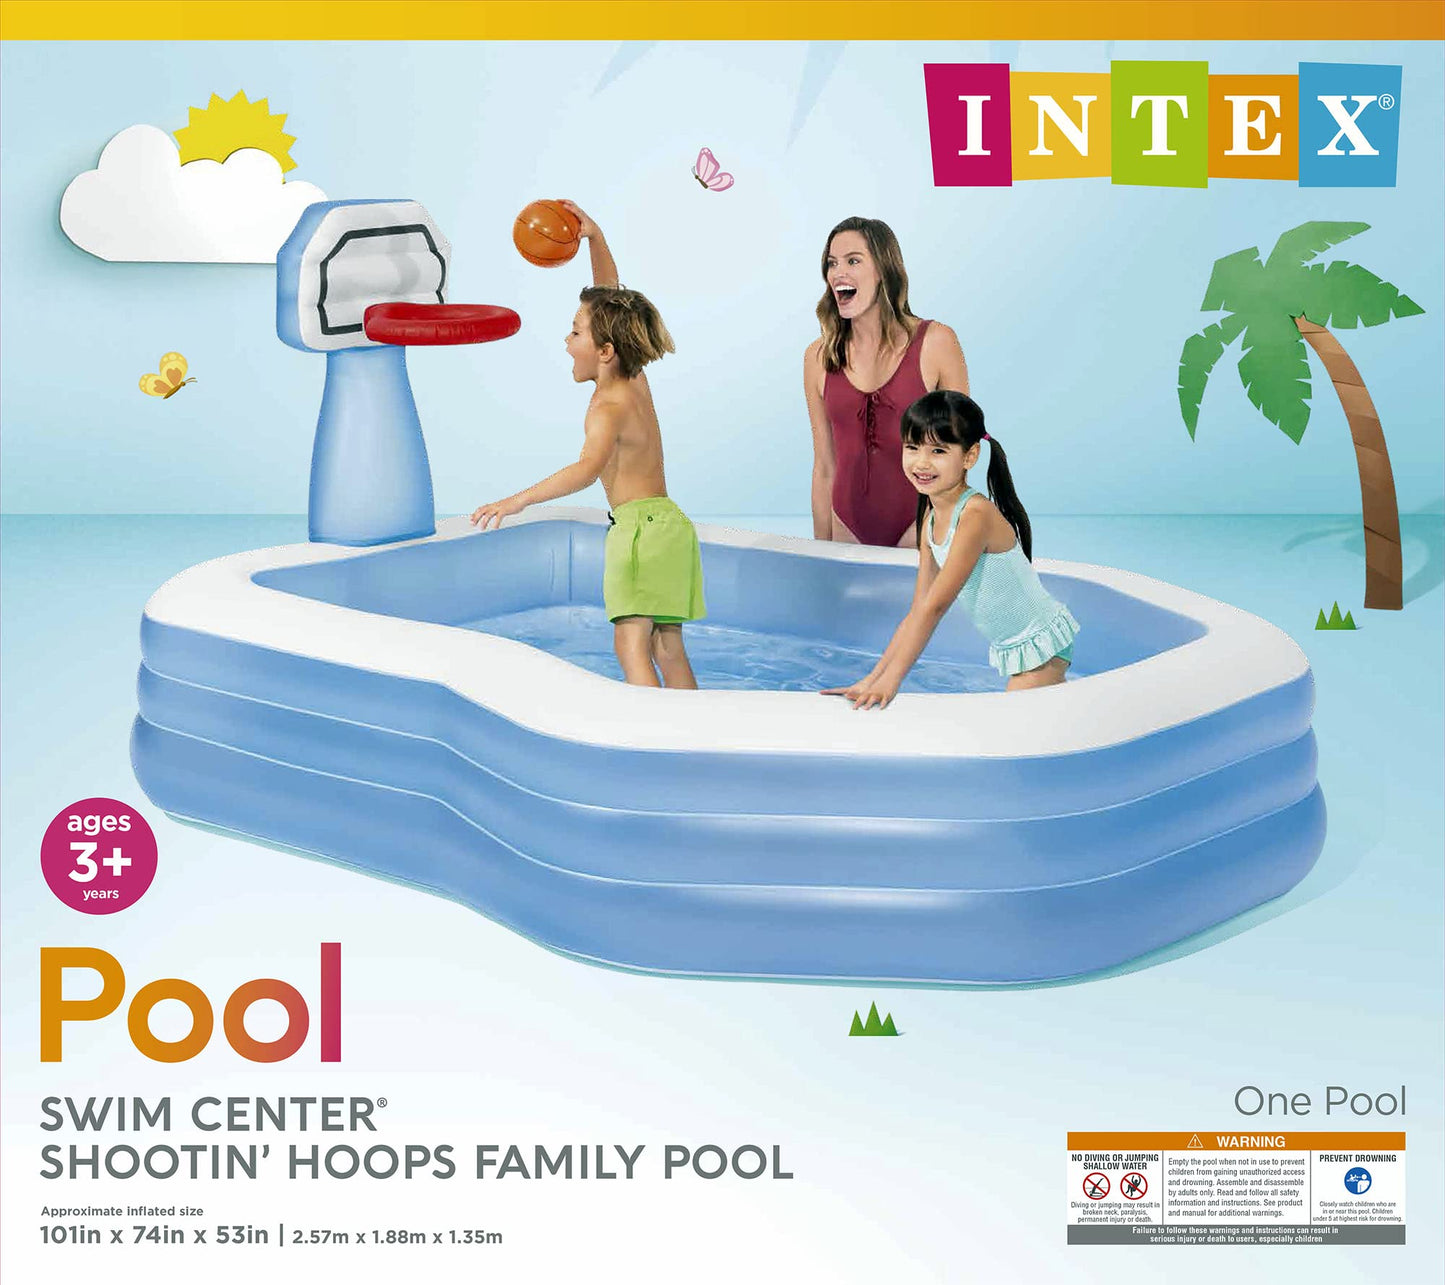 Intex Shootin' Hoops Swim Center Family Pool, Ages 3+